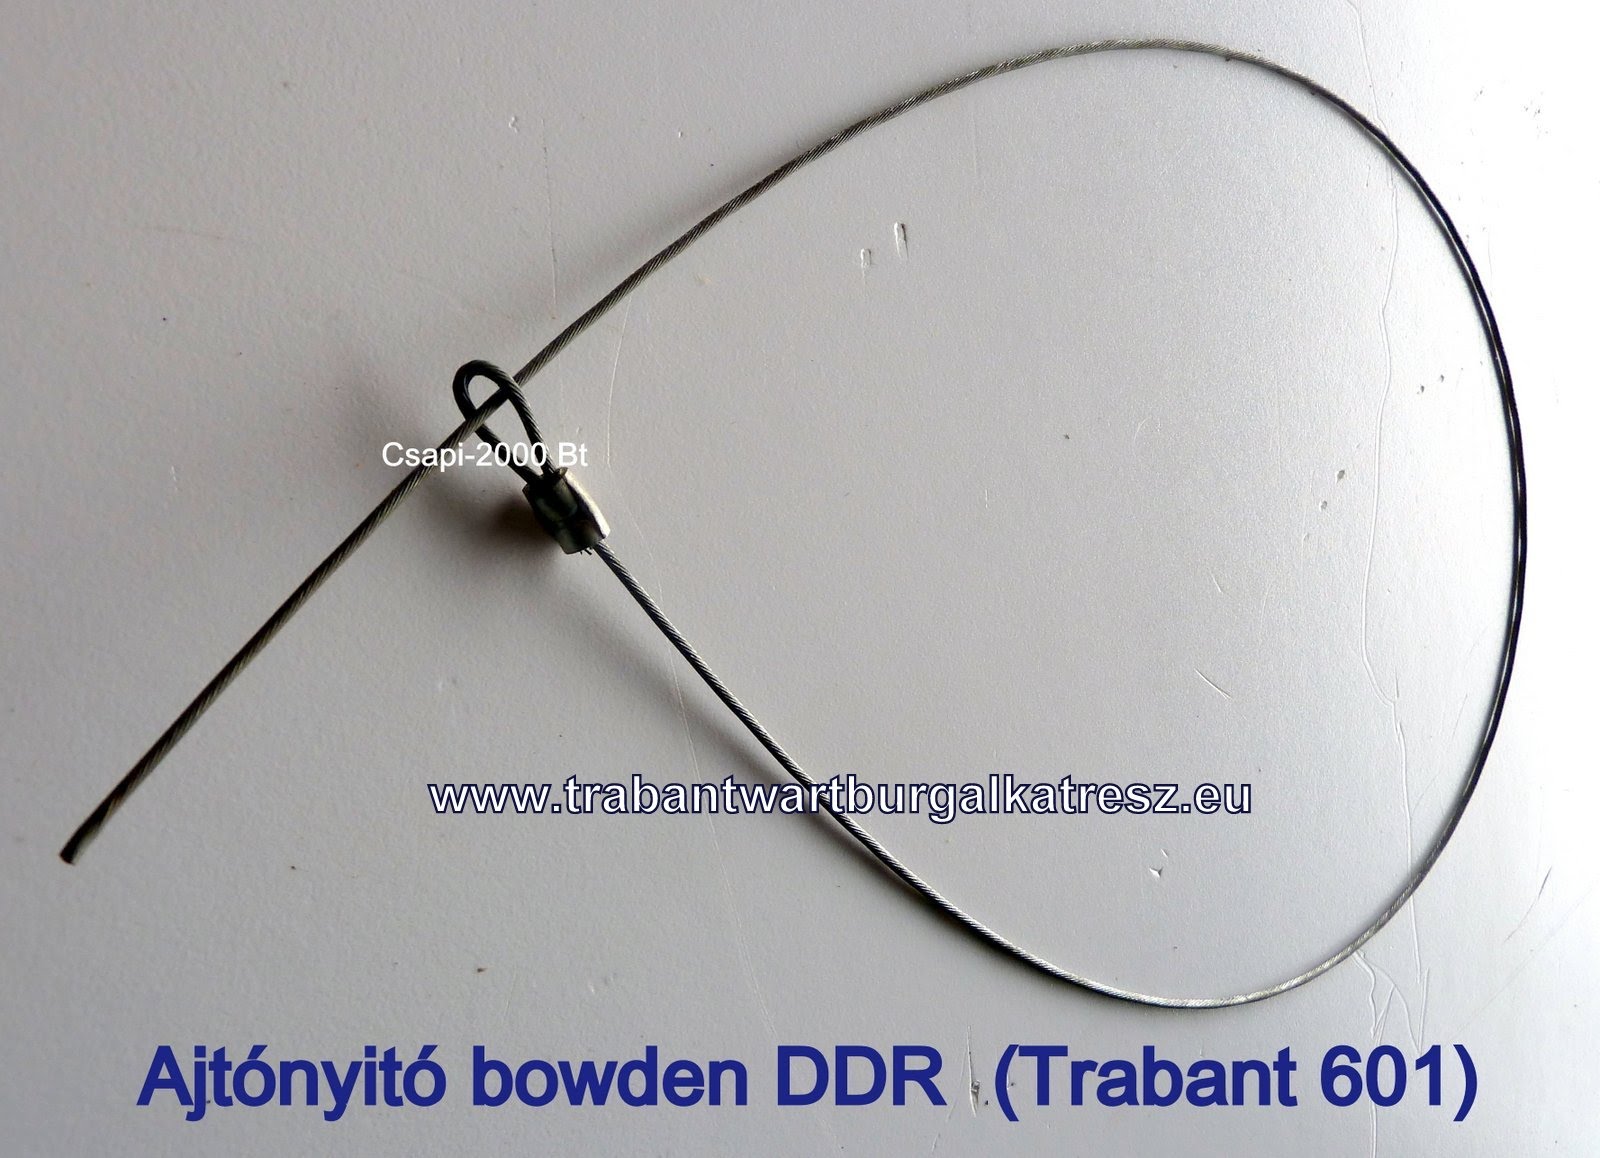 Ajtónyitó bowden DDR (Tr.601)